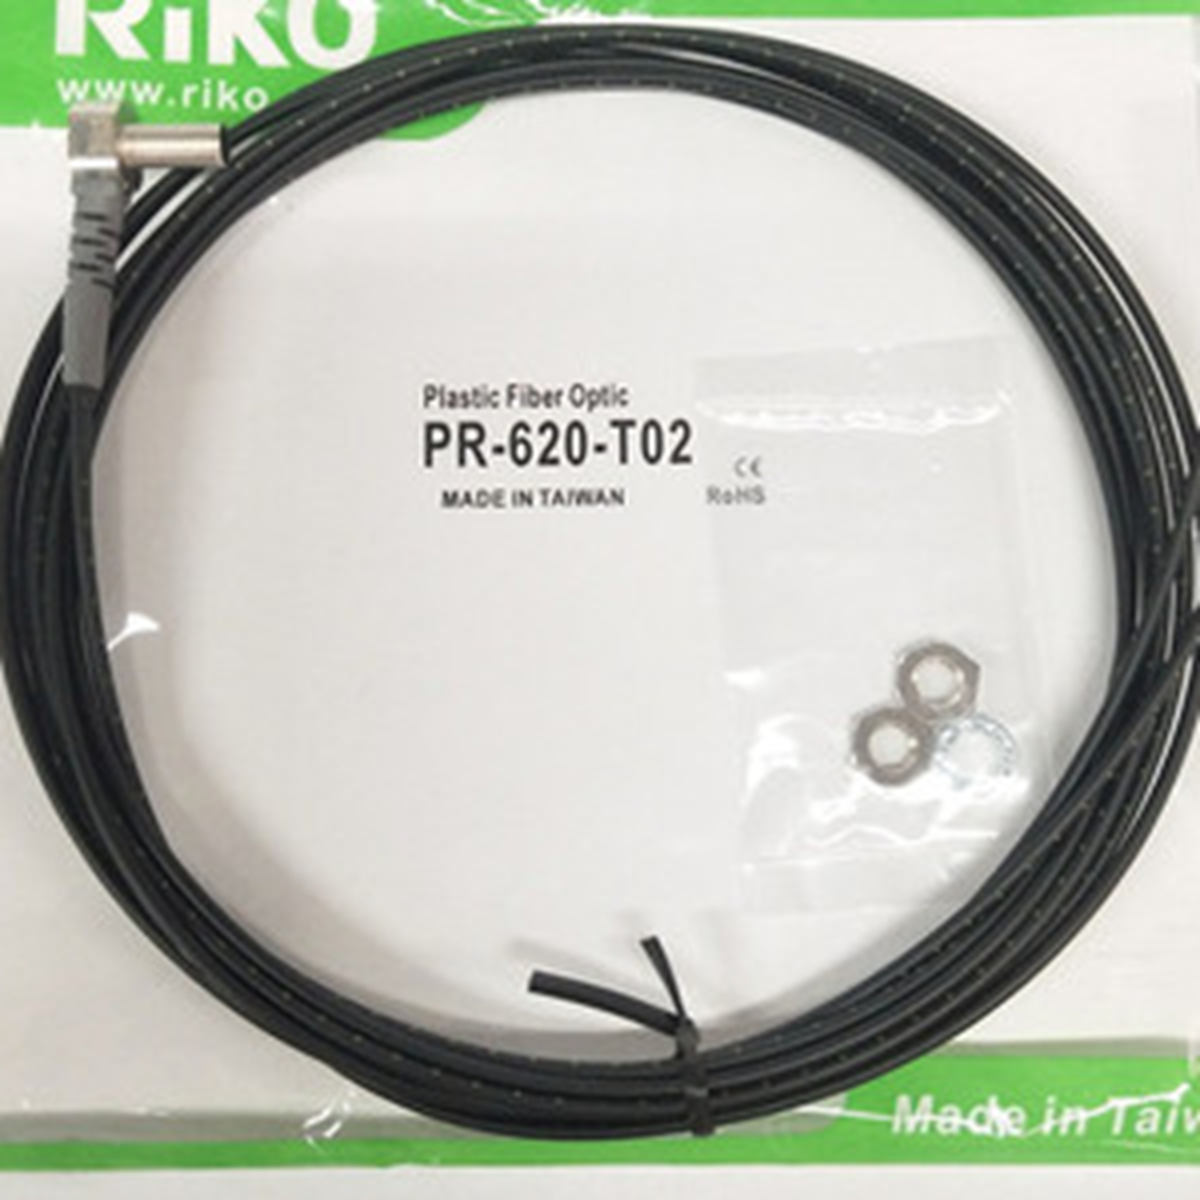 RIKO PR-620-T02 Reflective Right Angle L-Shaped Fiber